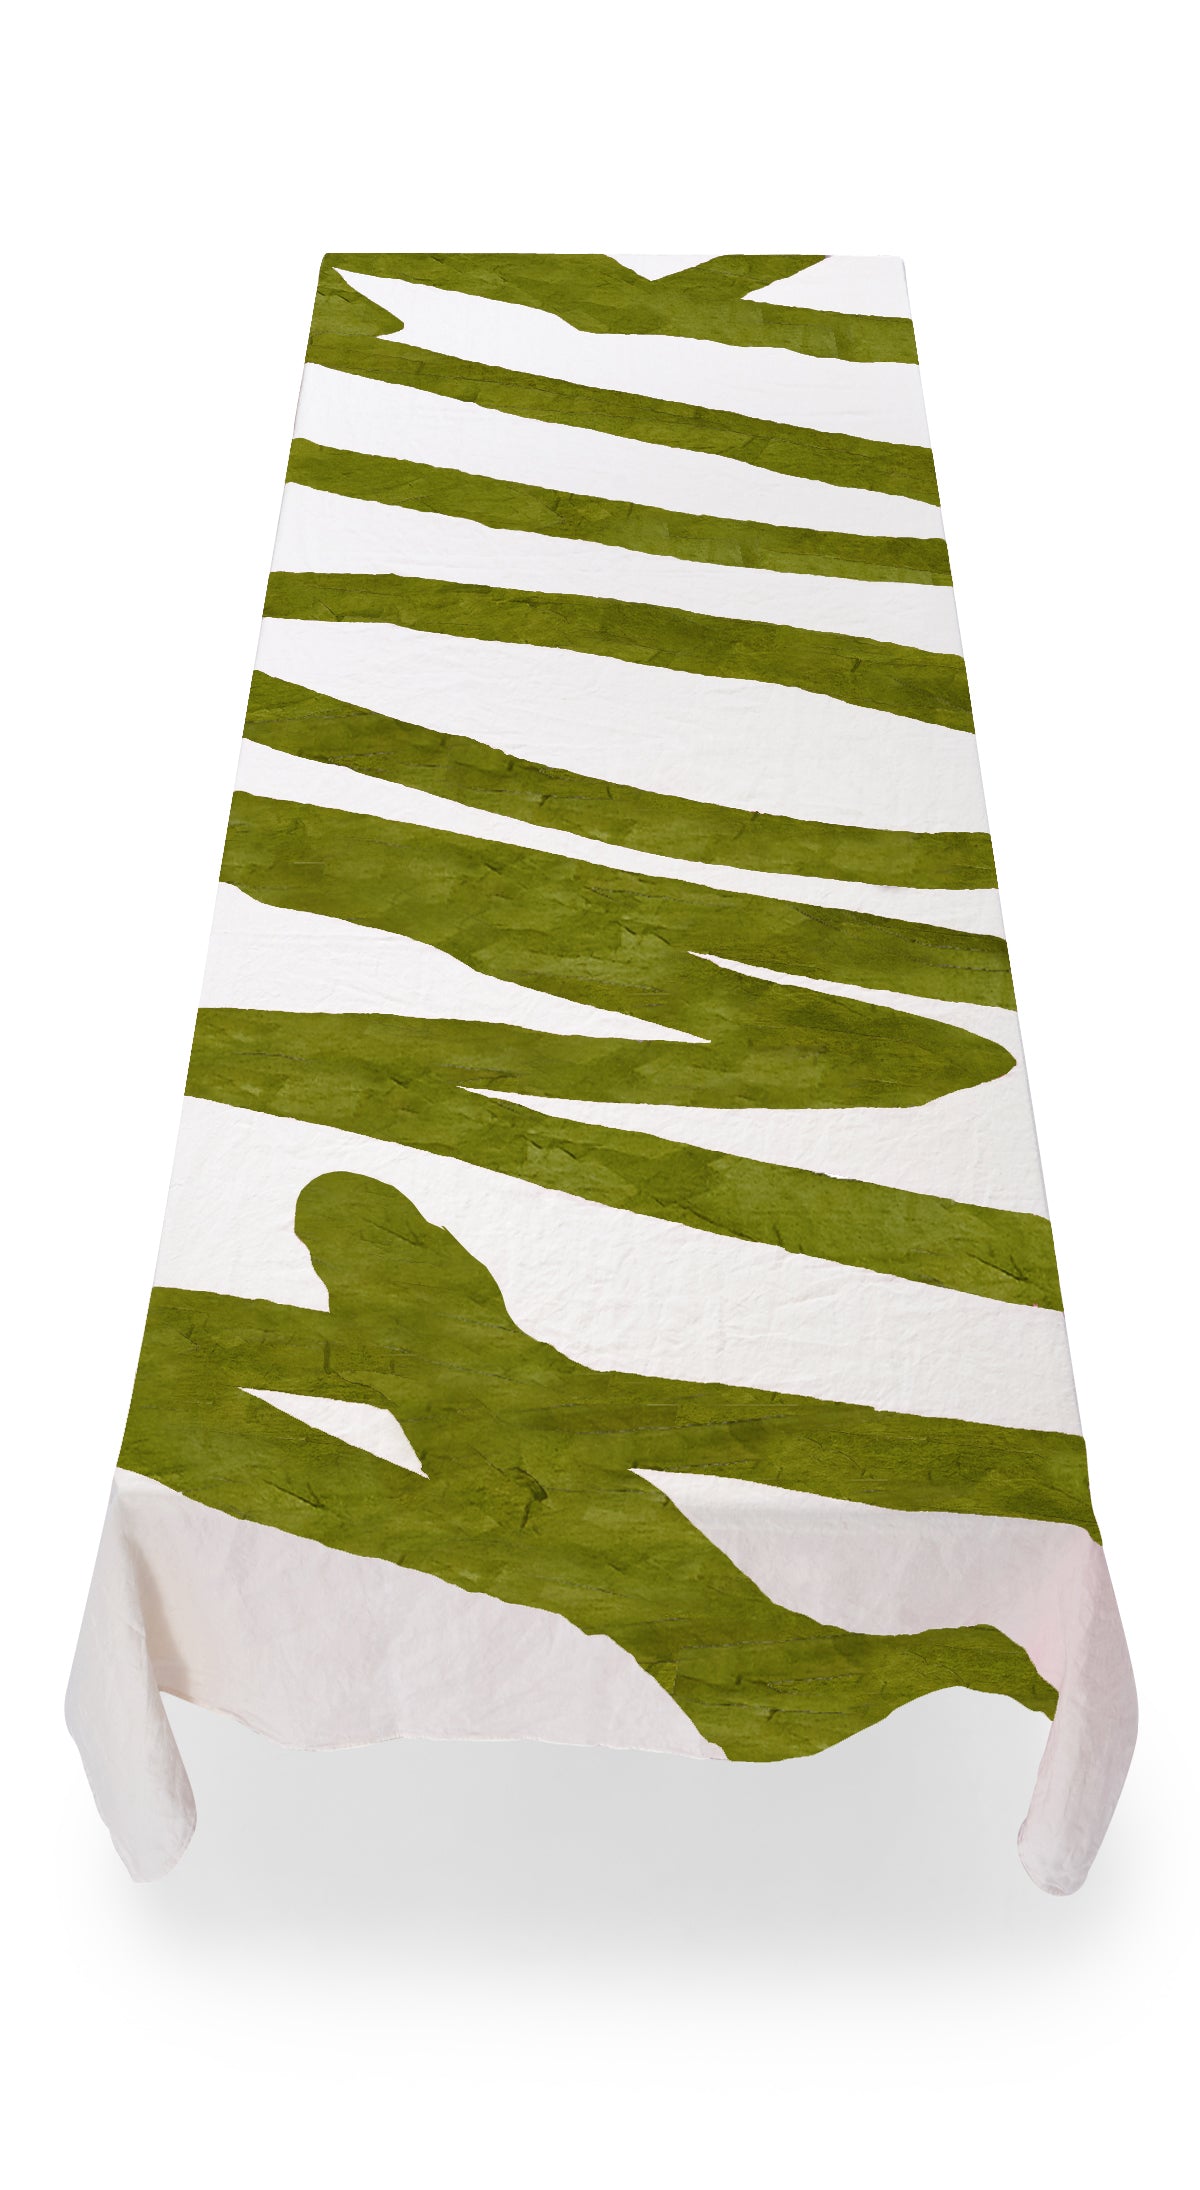 Bespoke Word Linen Tablecloth in Avocado Green